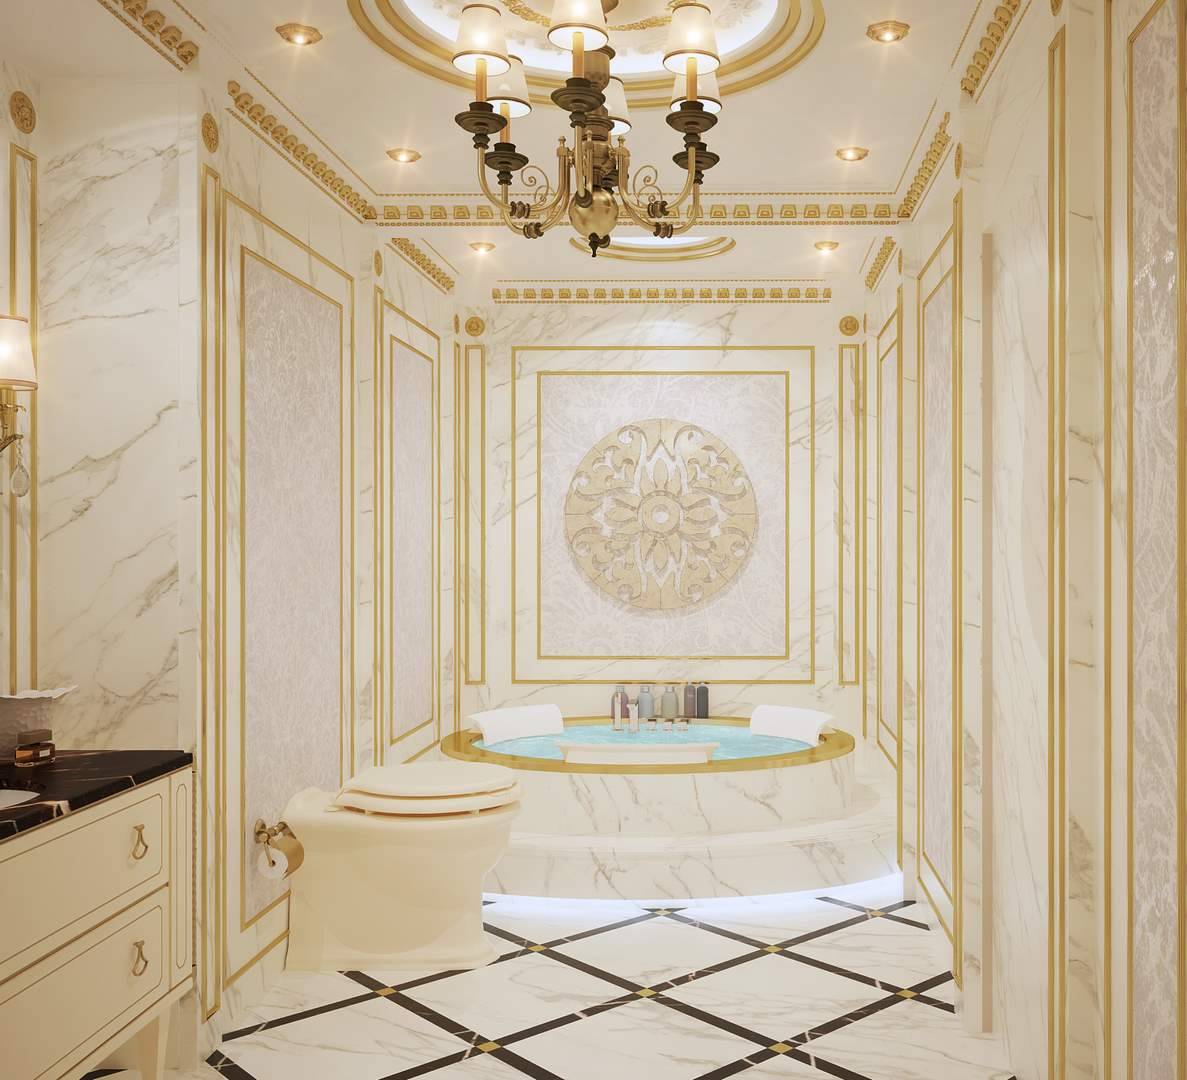 Malikane istanbul banyo iç mimar tasarımı